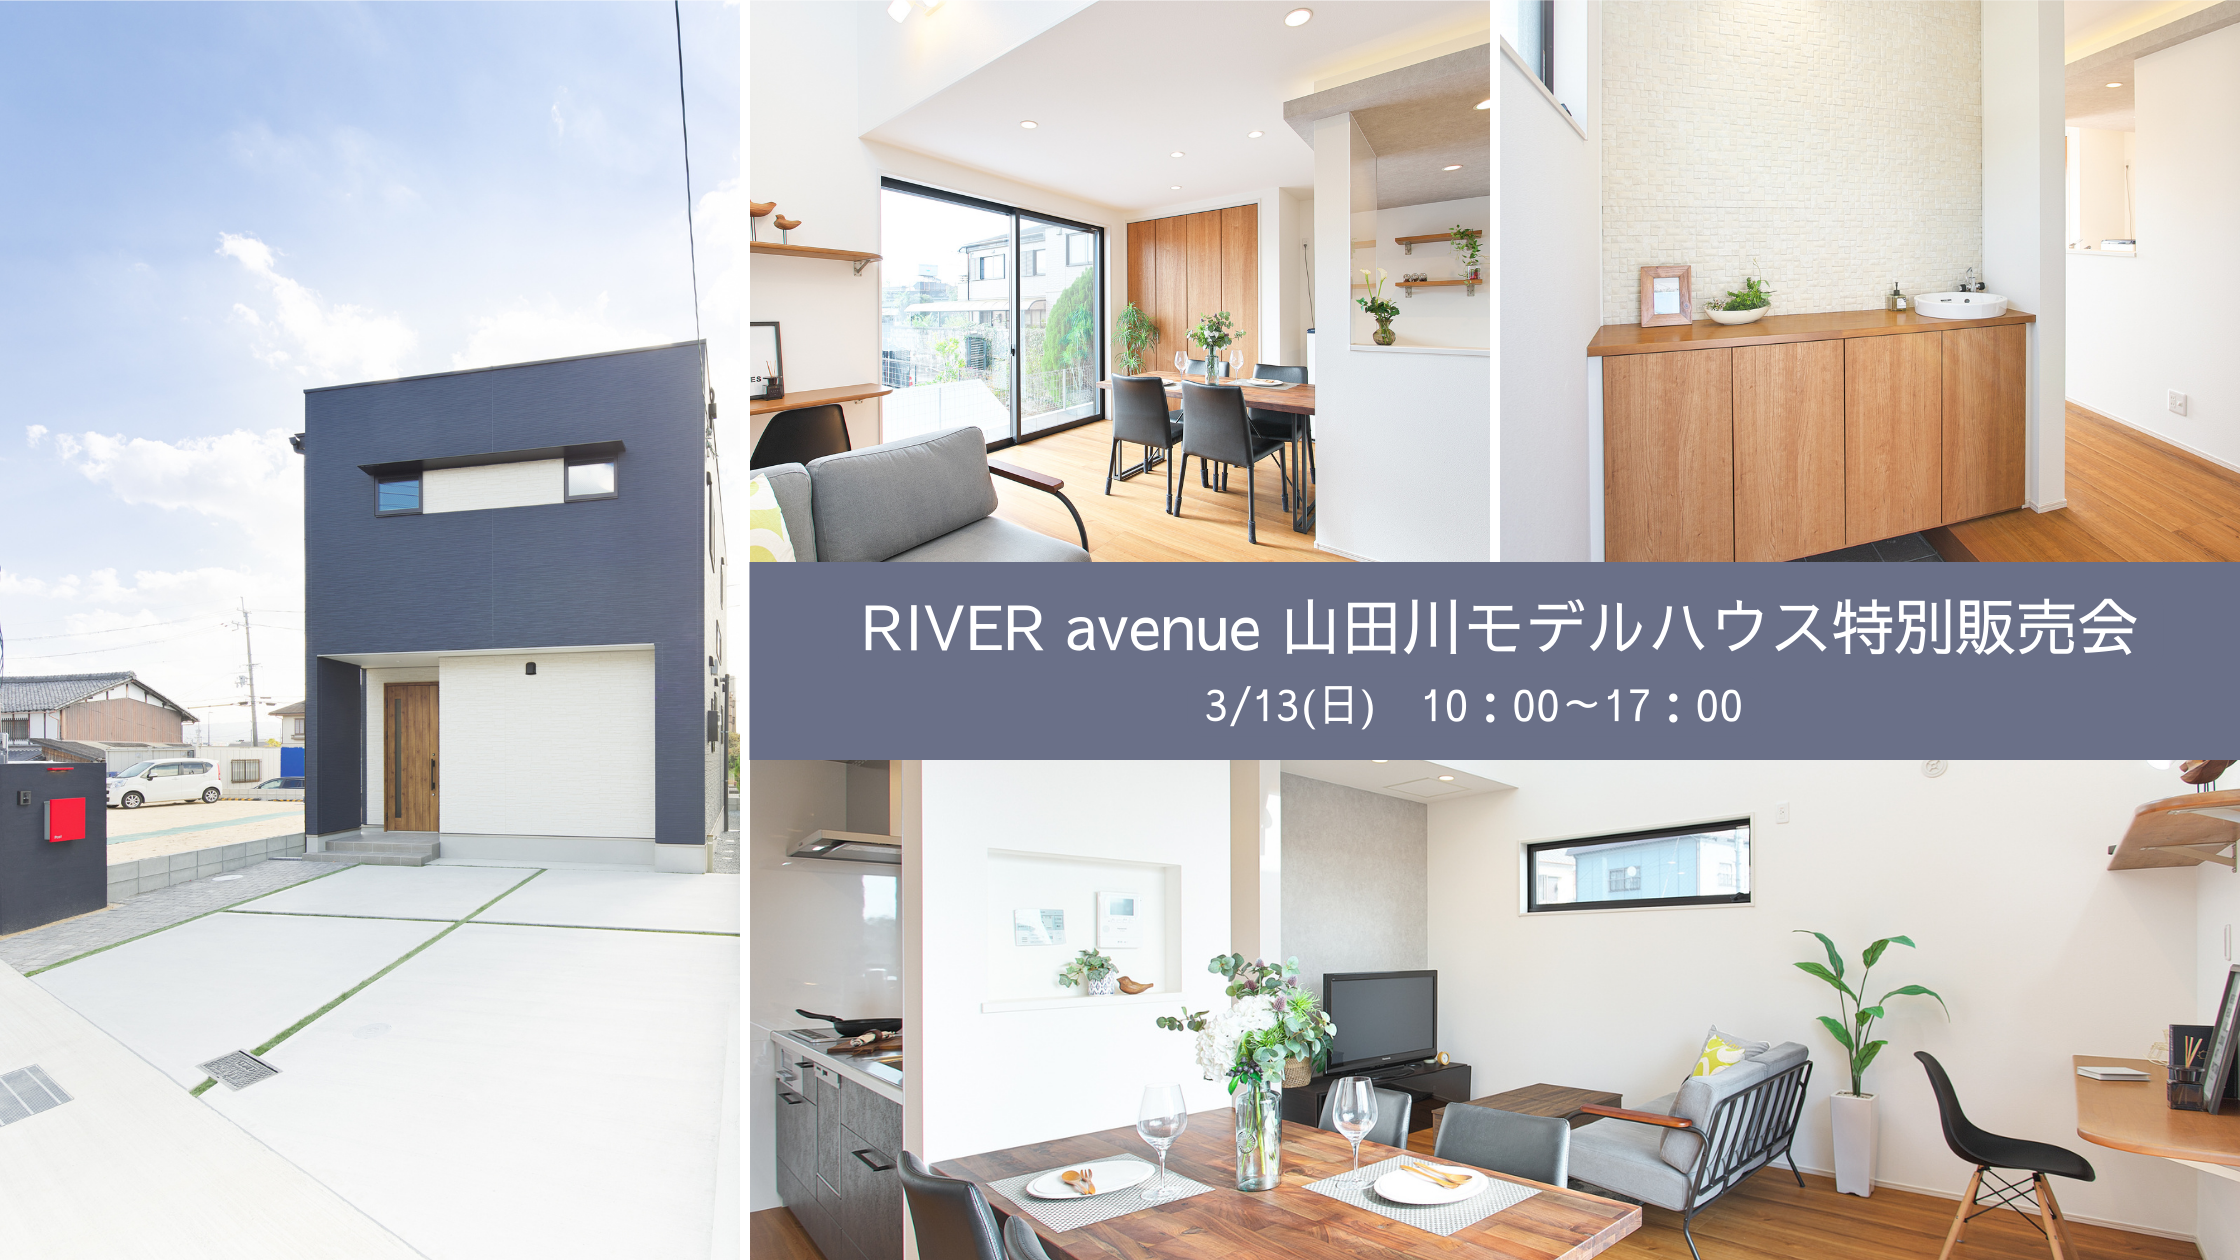 RIVER avenue 山田川モデルハウス特別販売会